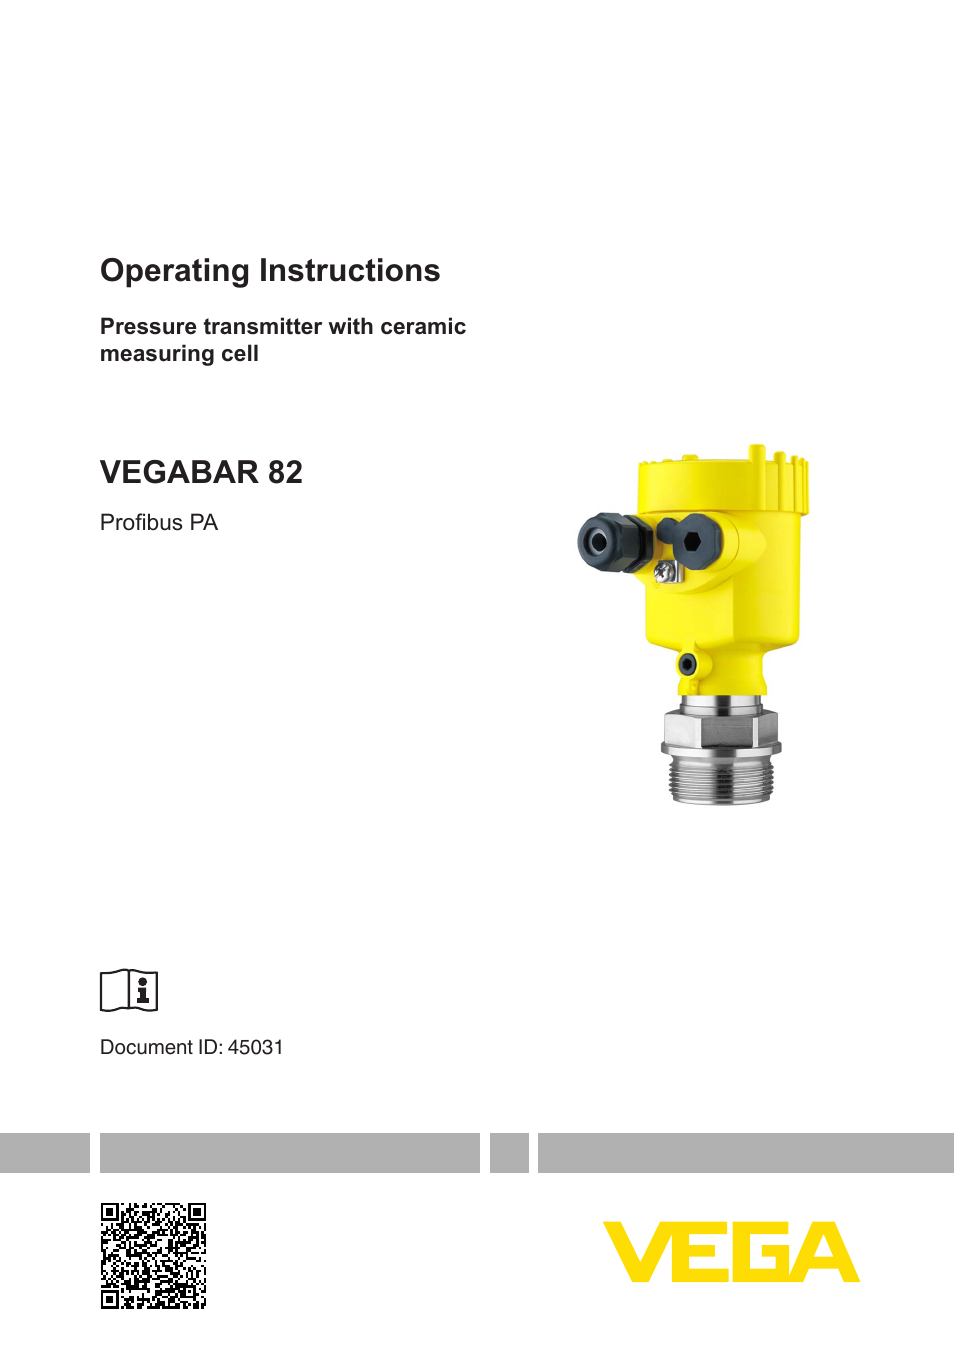 VEGABAR 82 Profibus PA - Operating Instructions